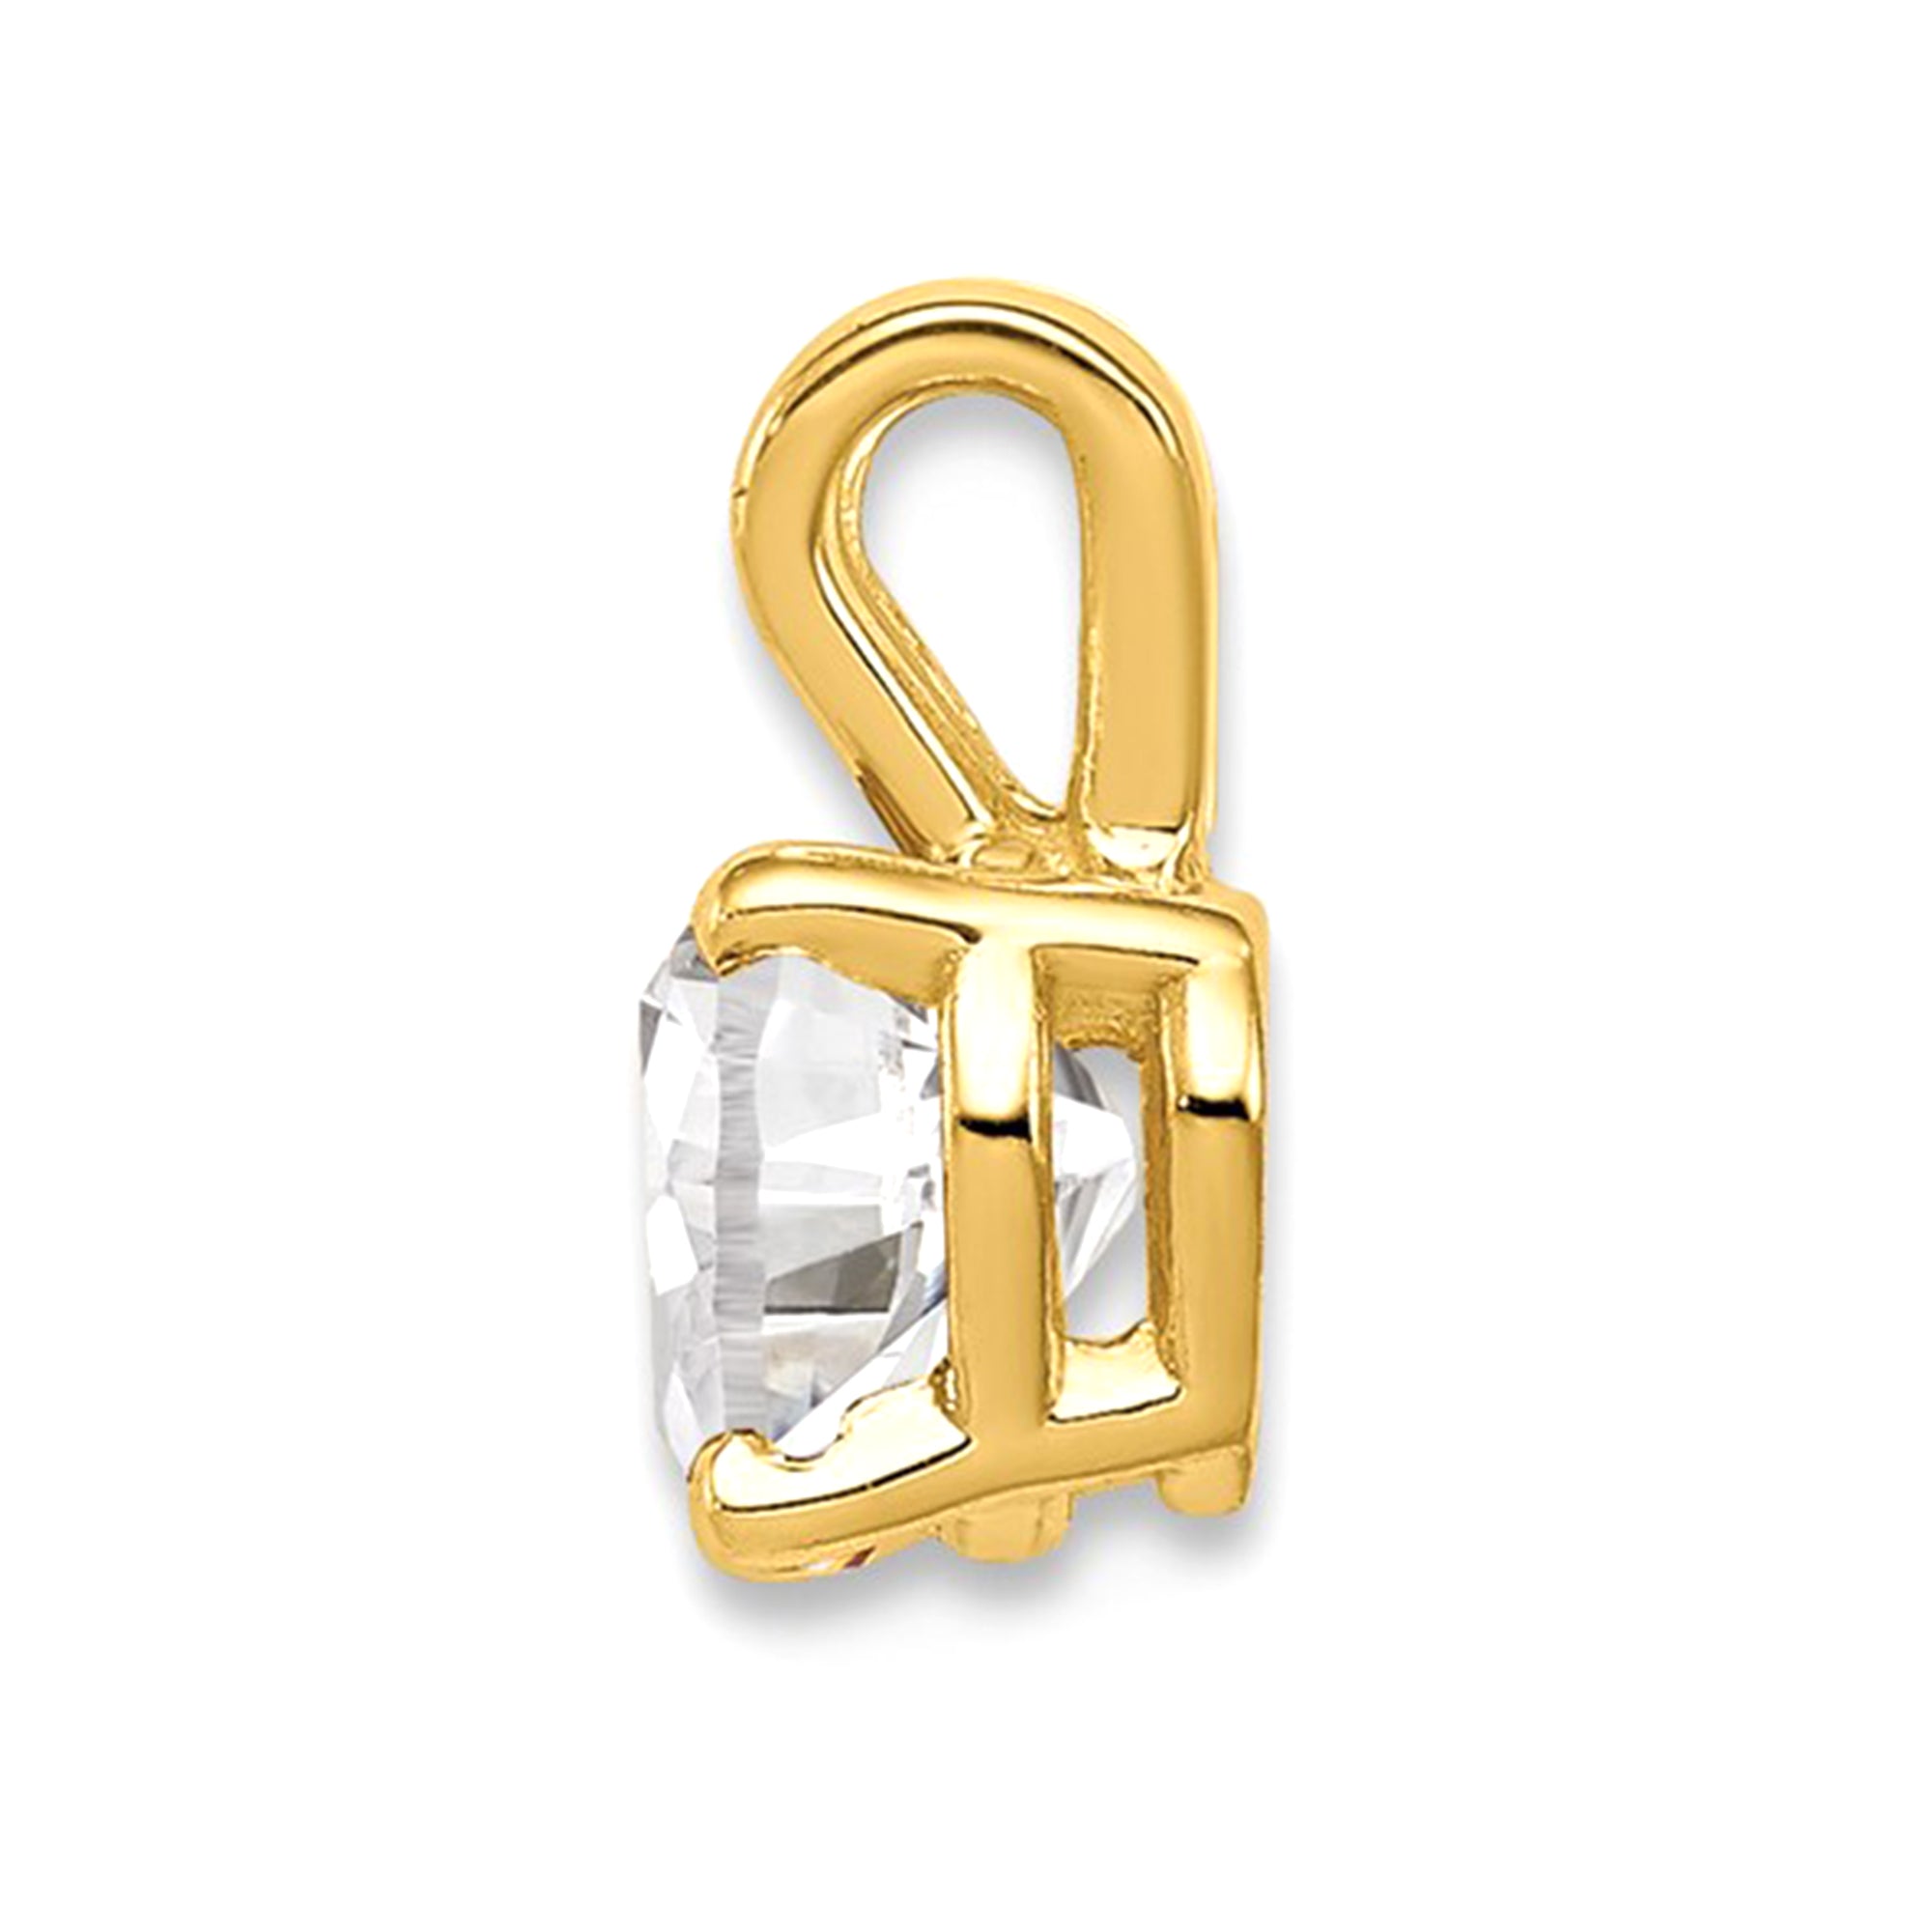 Real 14k Yellow Gold Heart Birthstone Gemstone Pendant Charm